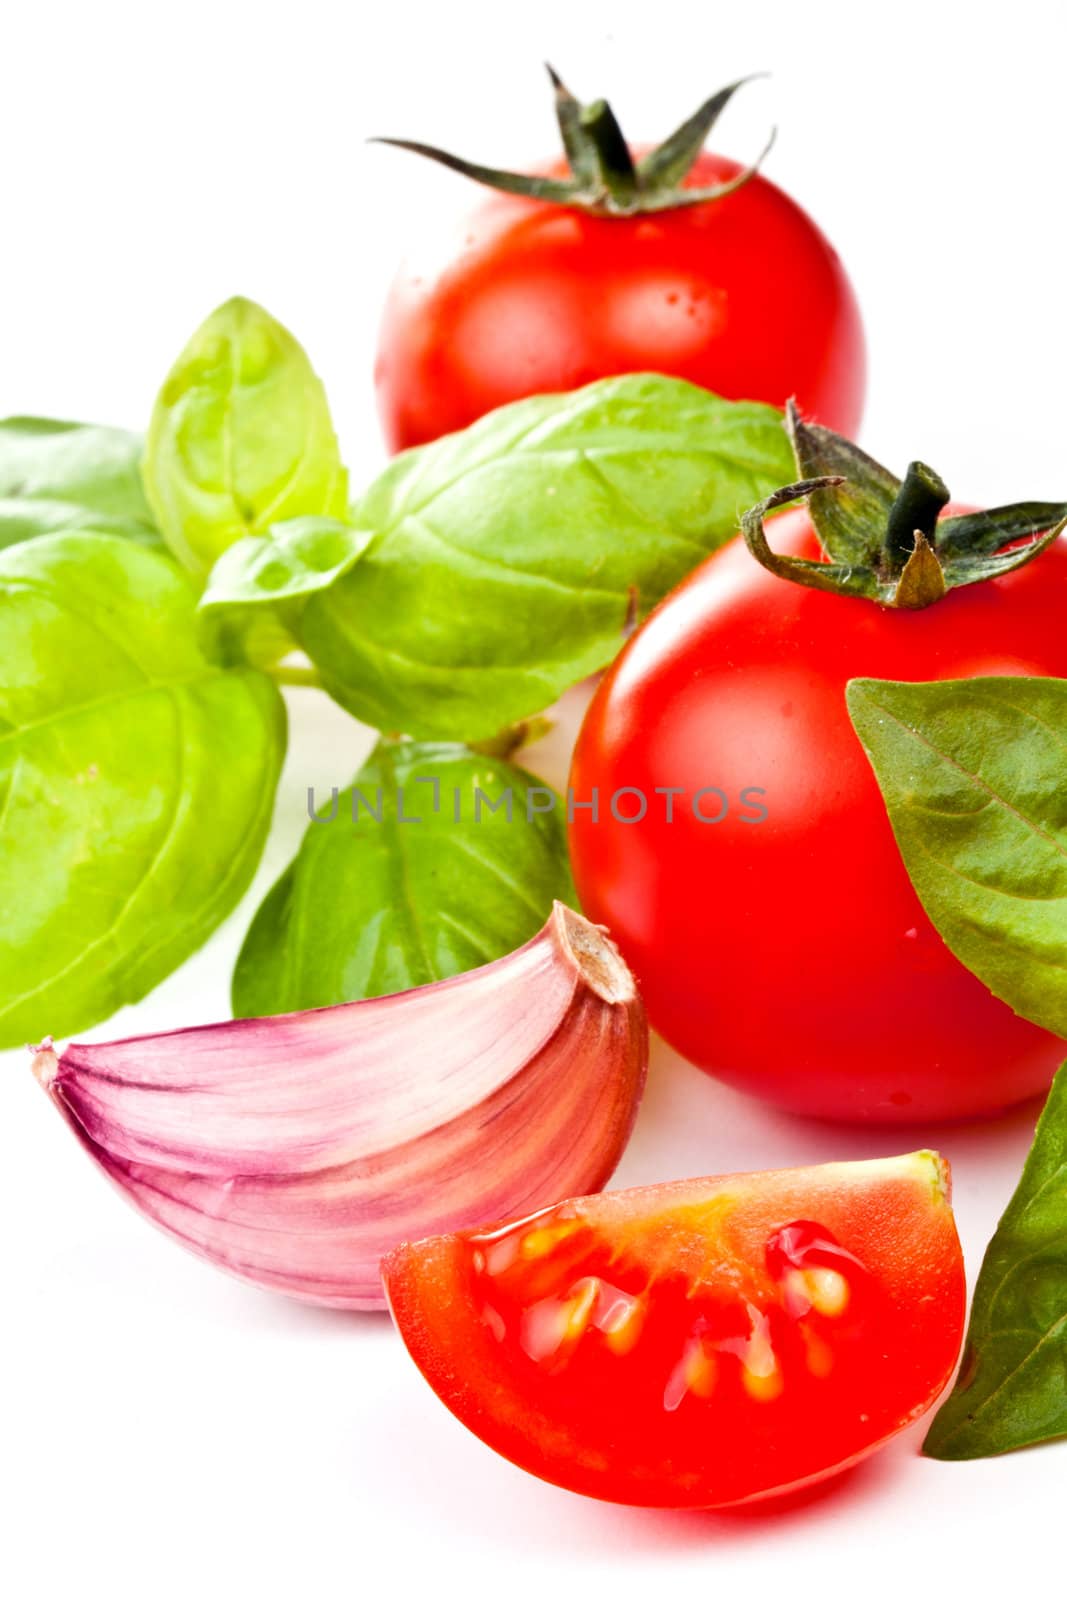 tomato of Pachino , basil and garlic by maxg71